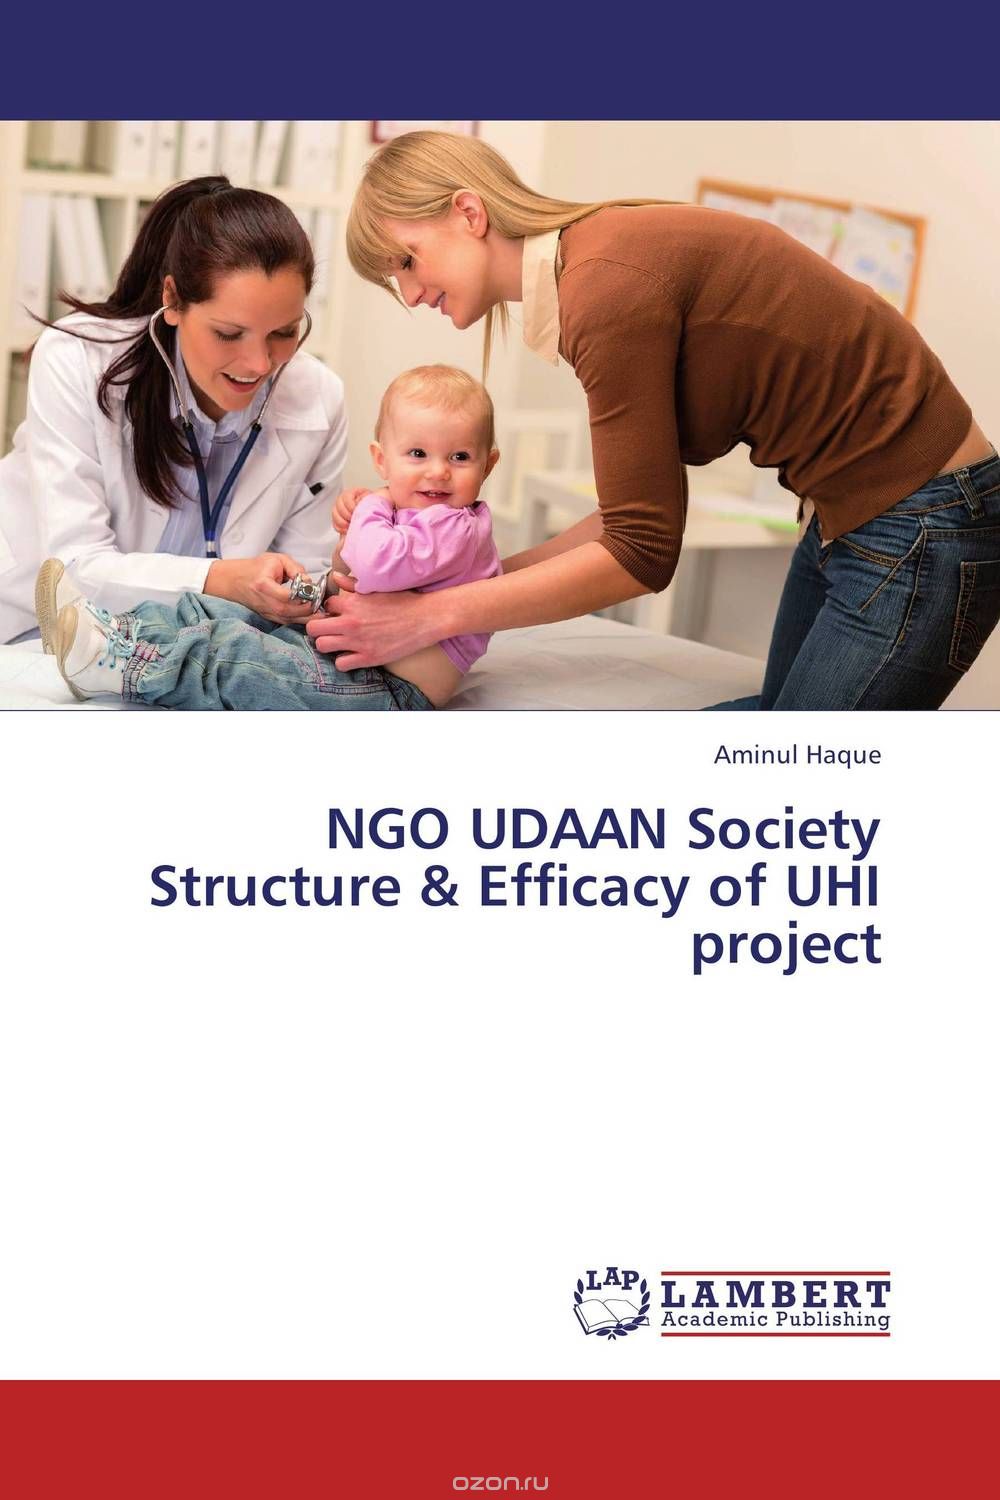 Скачать книгу "NGO UDAAN Society Structure & Efficacy of UHI project"